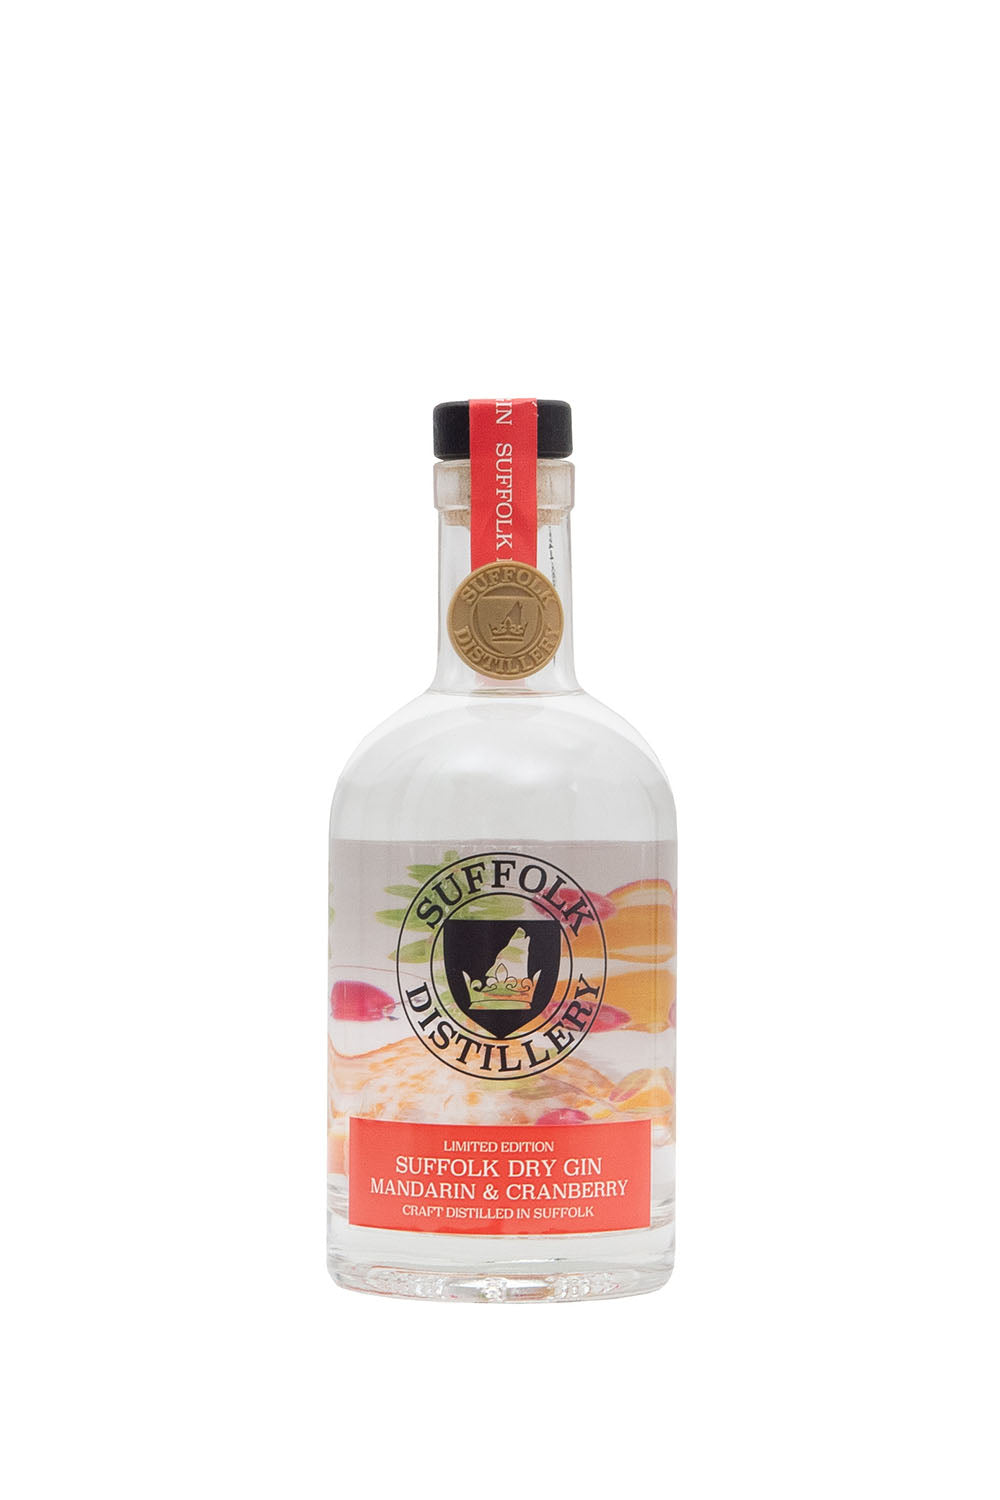 Mandarin & Cranberry Suffolk Dry Gin – Limited Edition